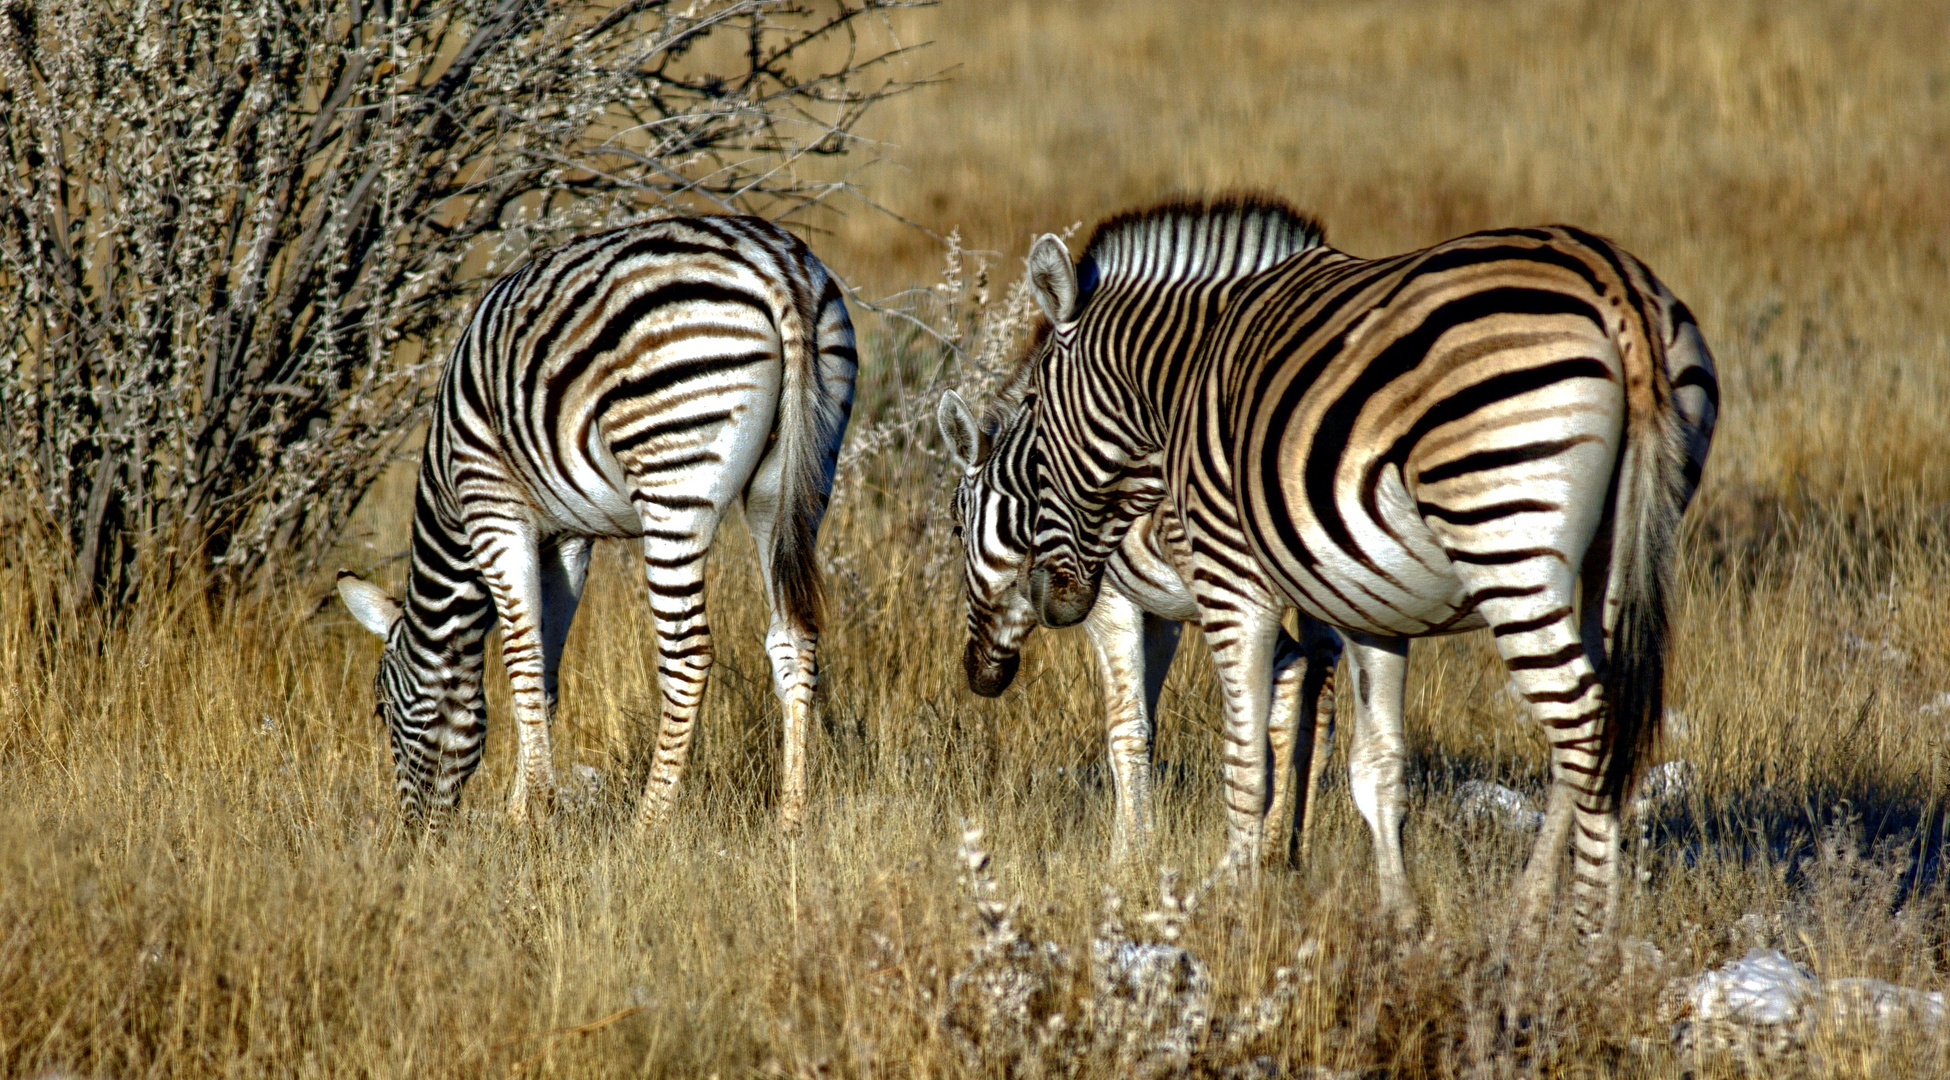 zebras in Etosha NP